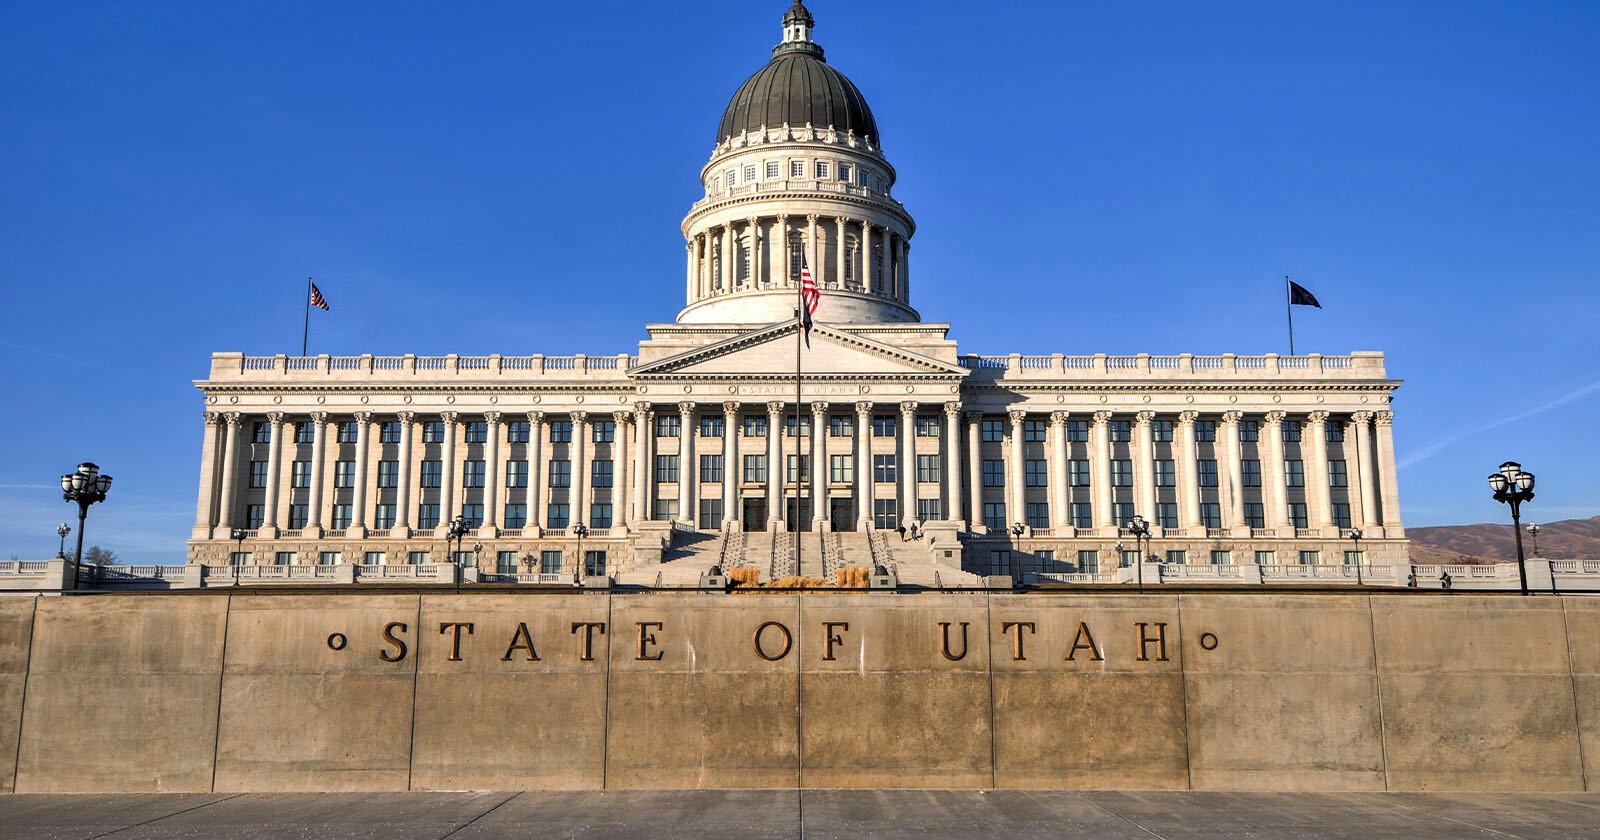 New Utah Laws Say Minors Must Get Parental Consent to Use Social Media